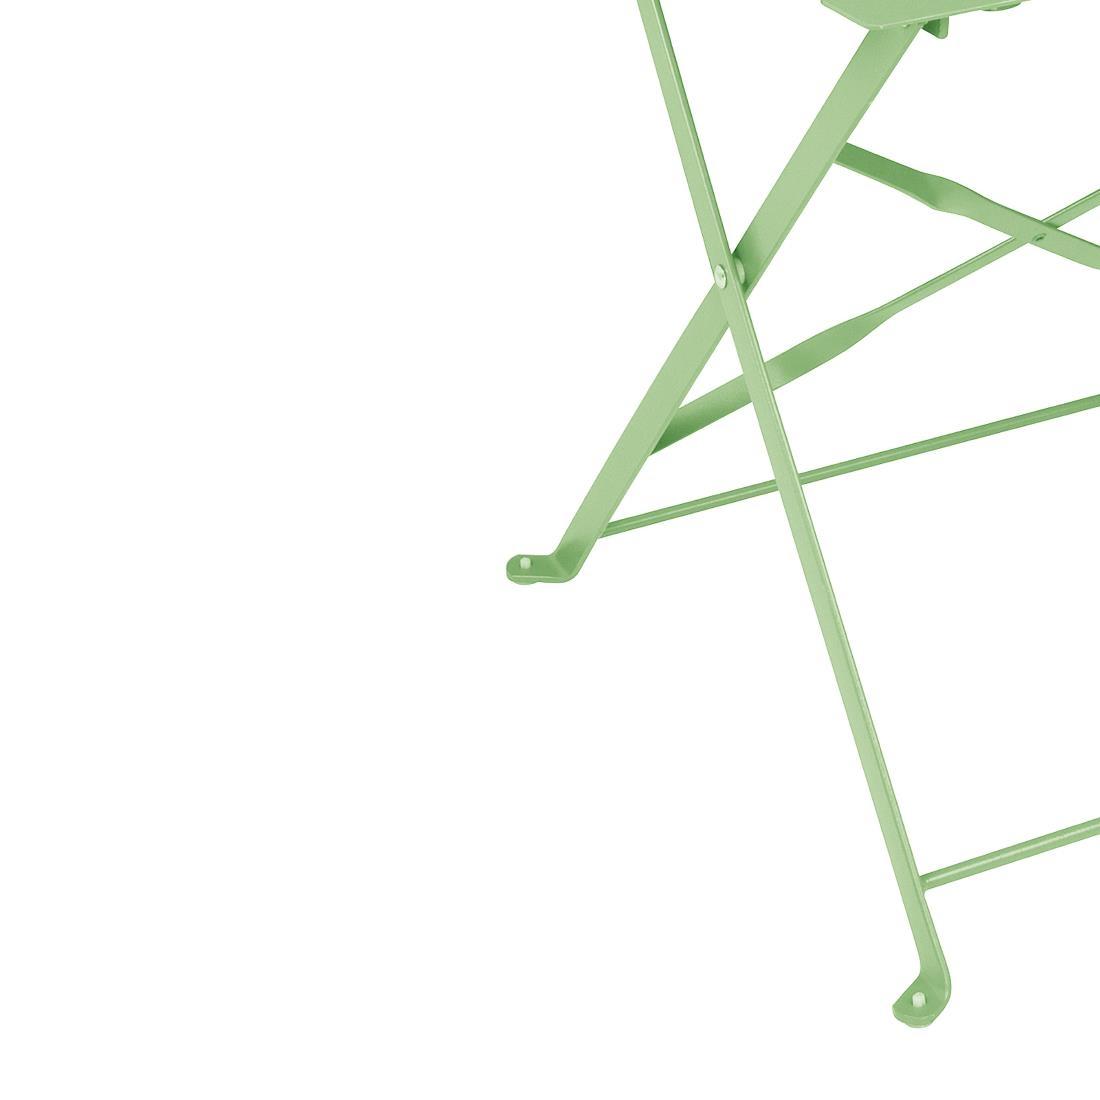 Bolero Pavement Style Steel Folding Chairs Light Green (Pack of 2)